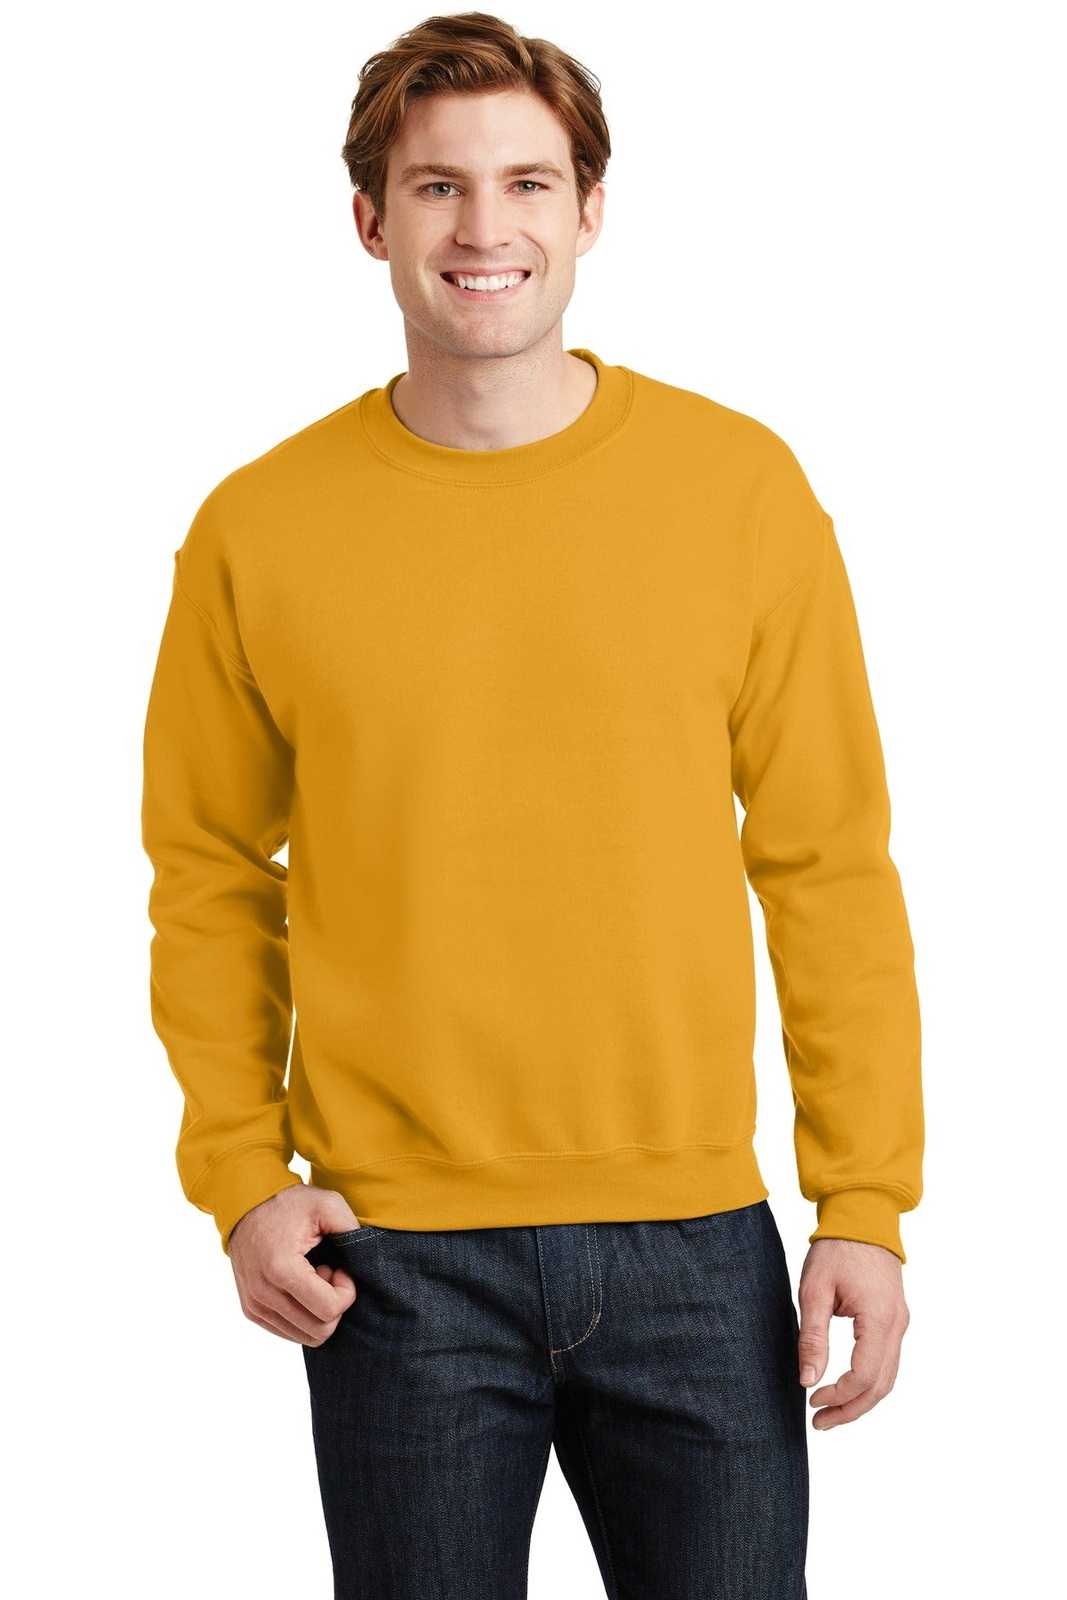 Gildan 18000 Heavy Blend Crewneck Sweatshirt - Gold